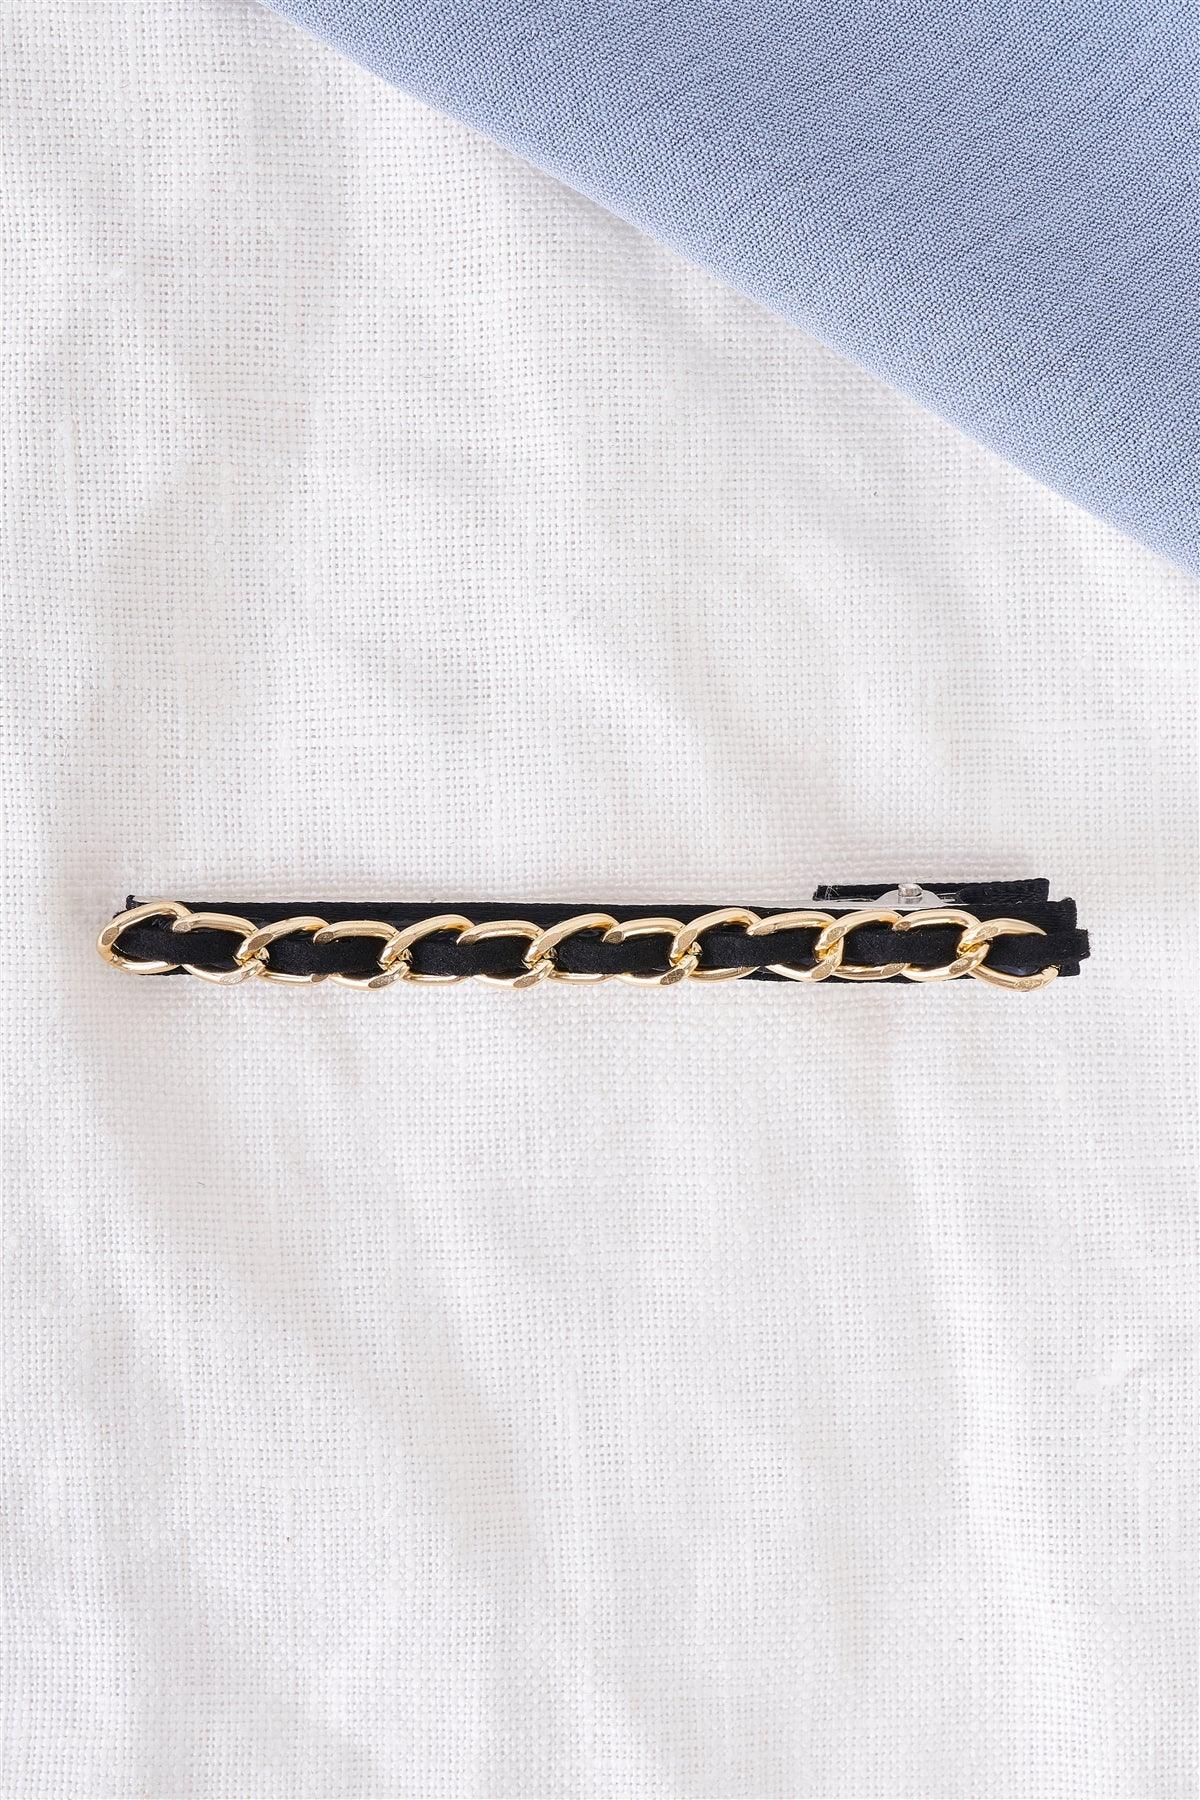 Black Velvet & Gold Chain Large Alligator Hair Clip / 3 Pieces